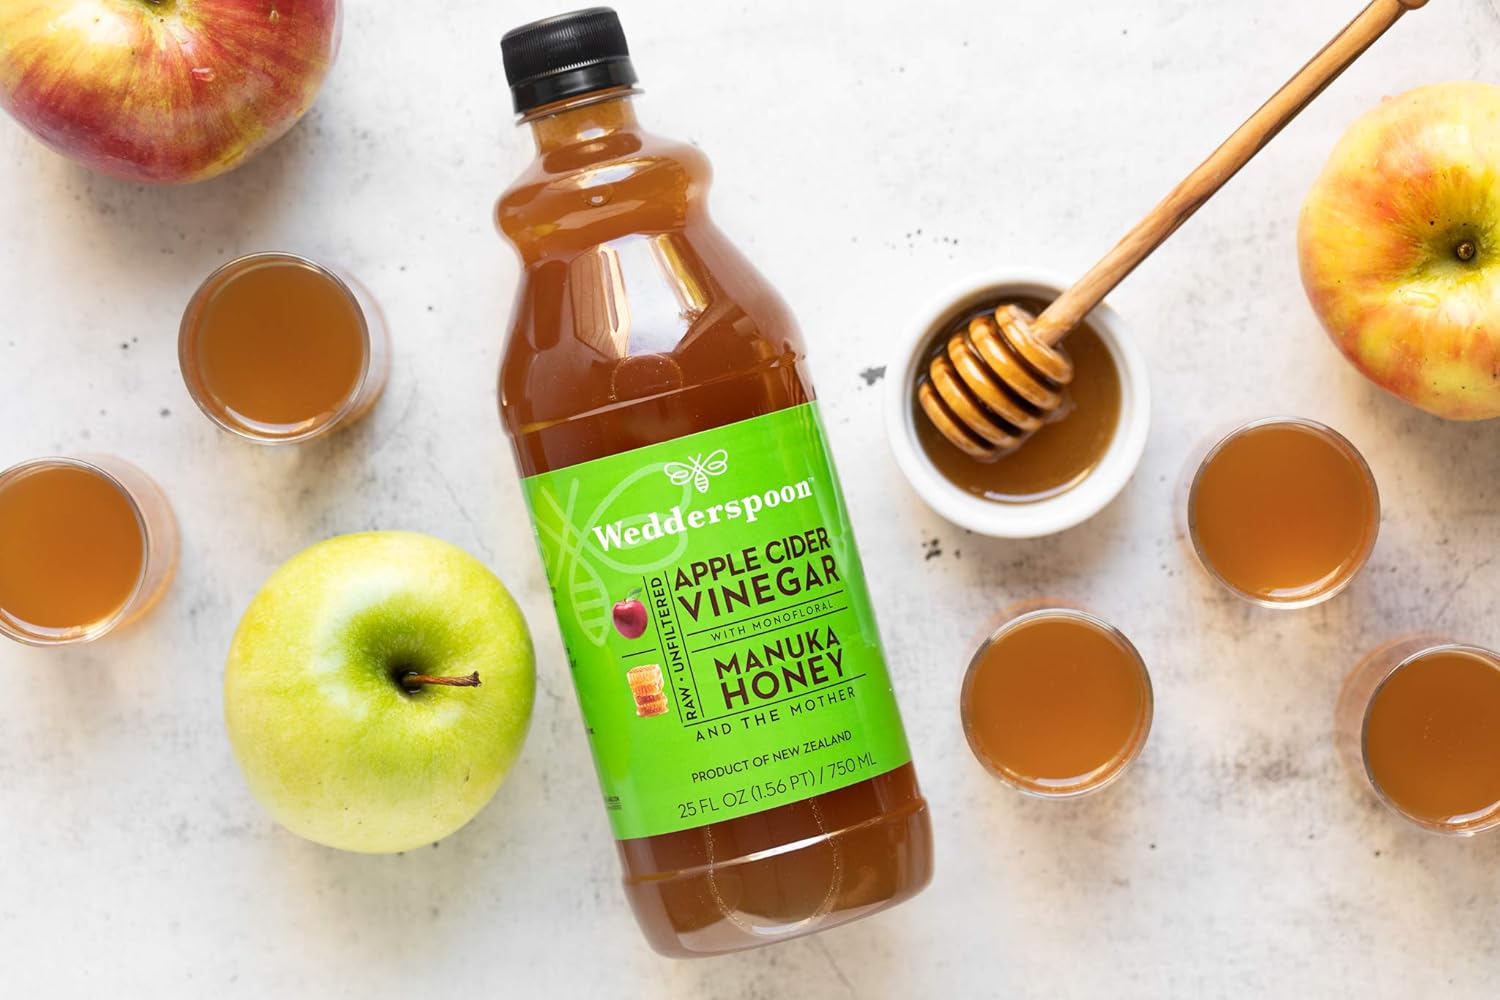 Wedderspoon Apple Cider Vinegar With Monofloral Manuka Honey & The Mother, 25 fl oz : Everything Else